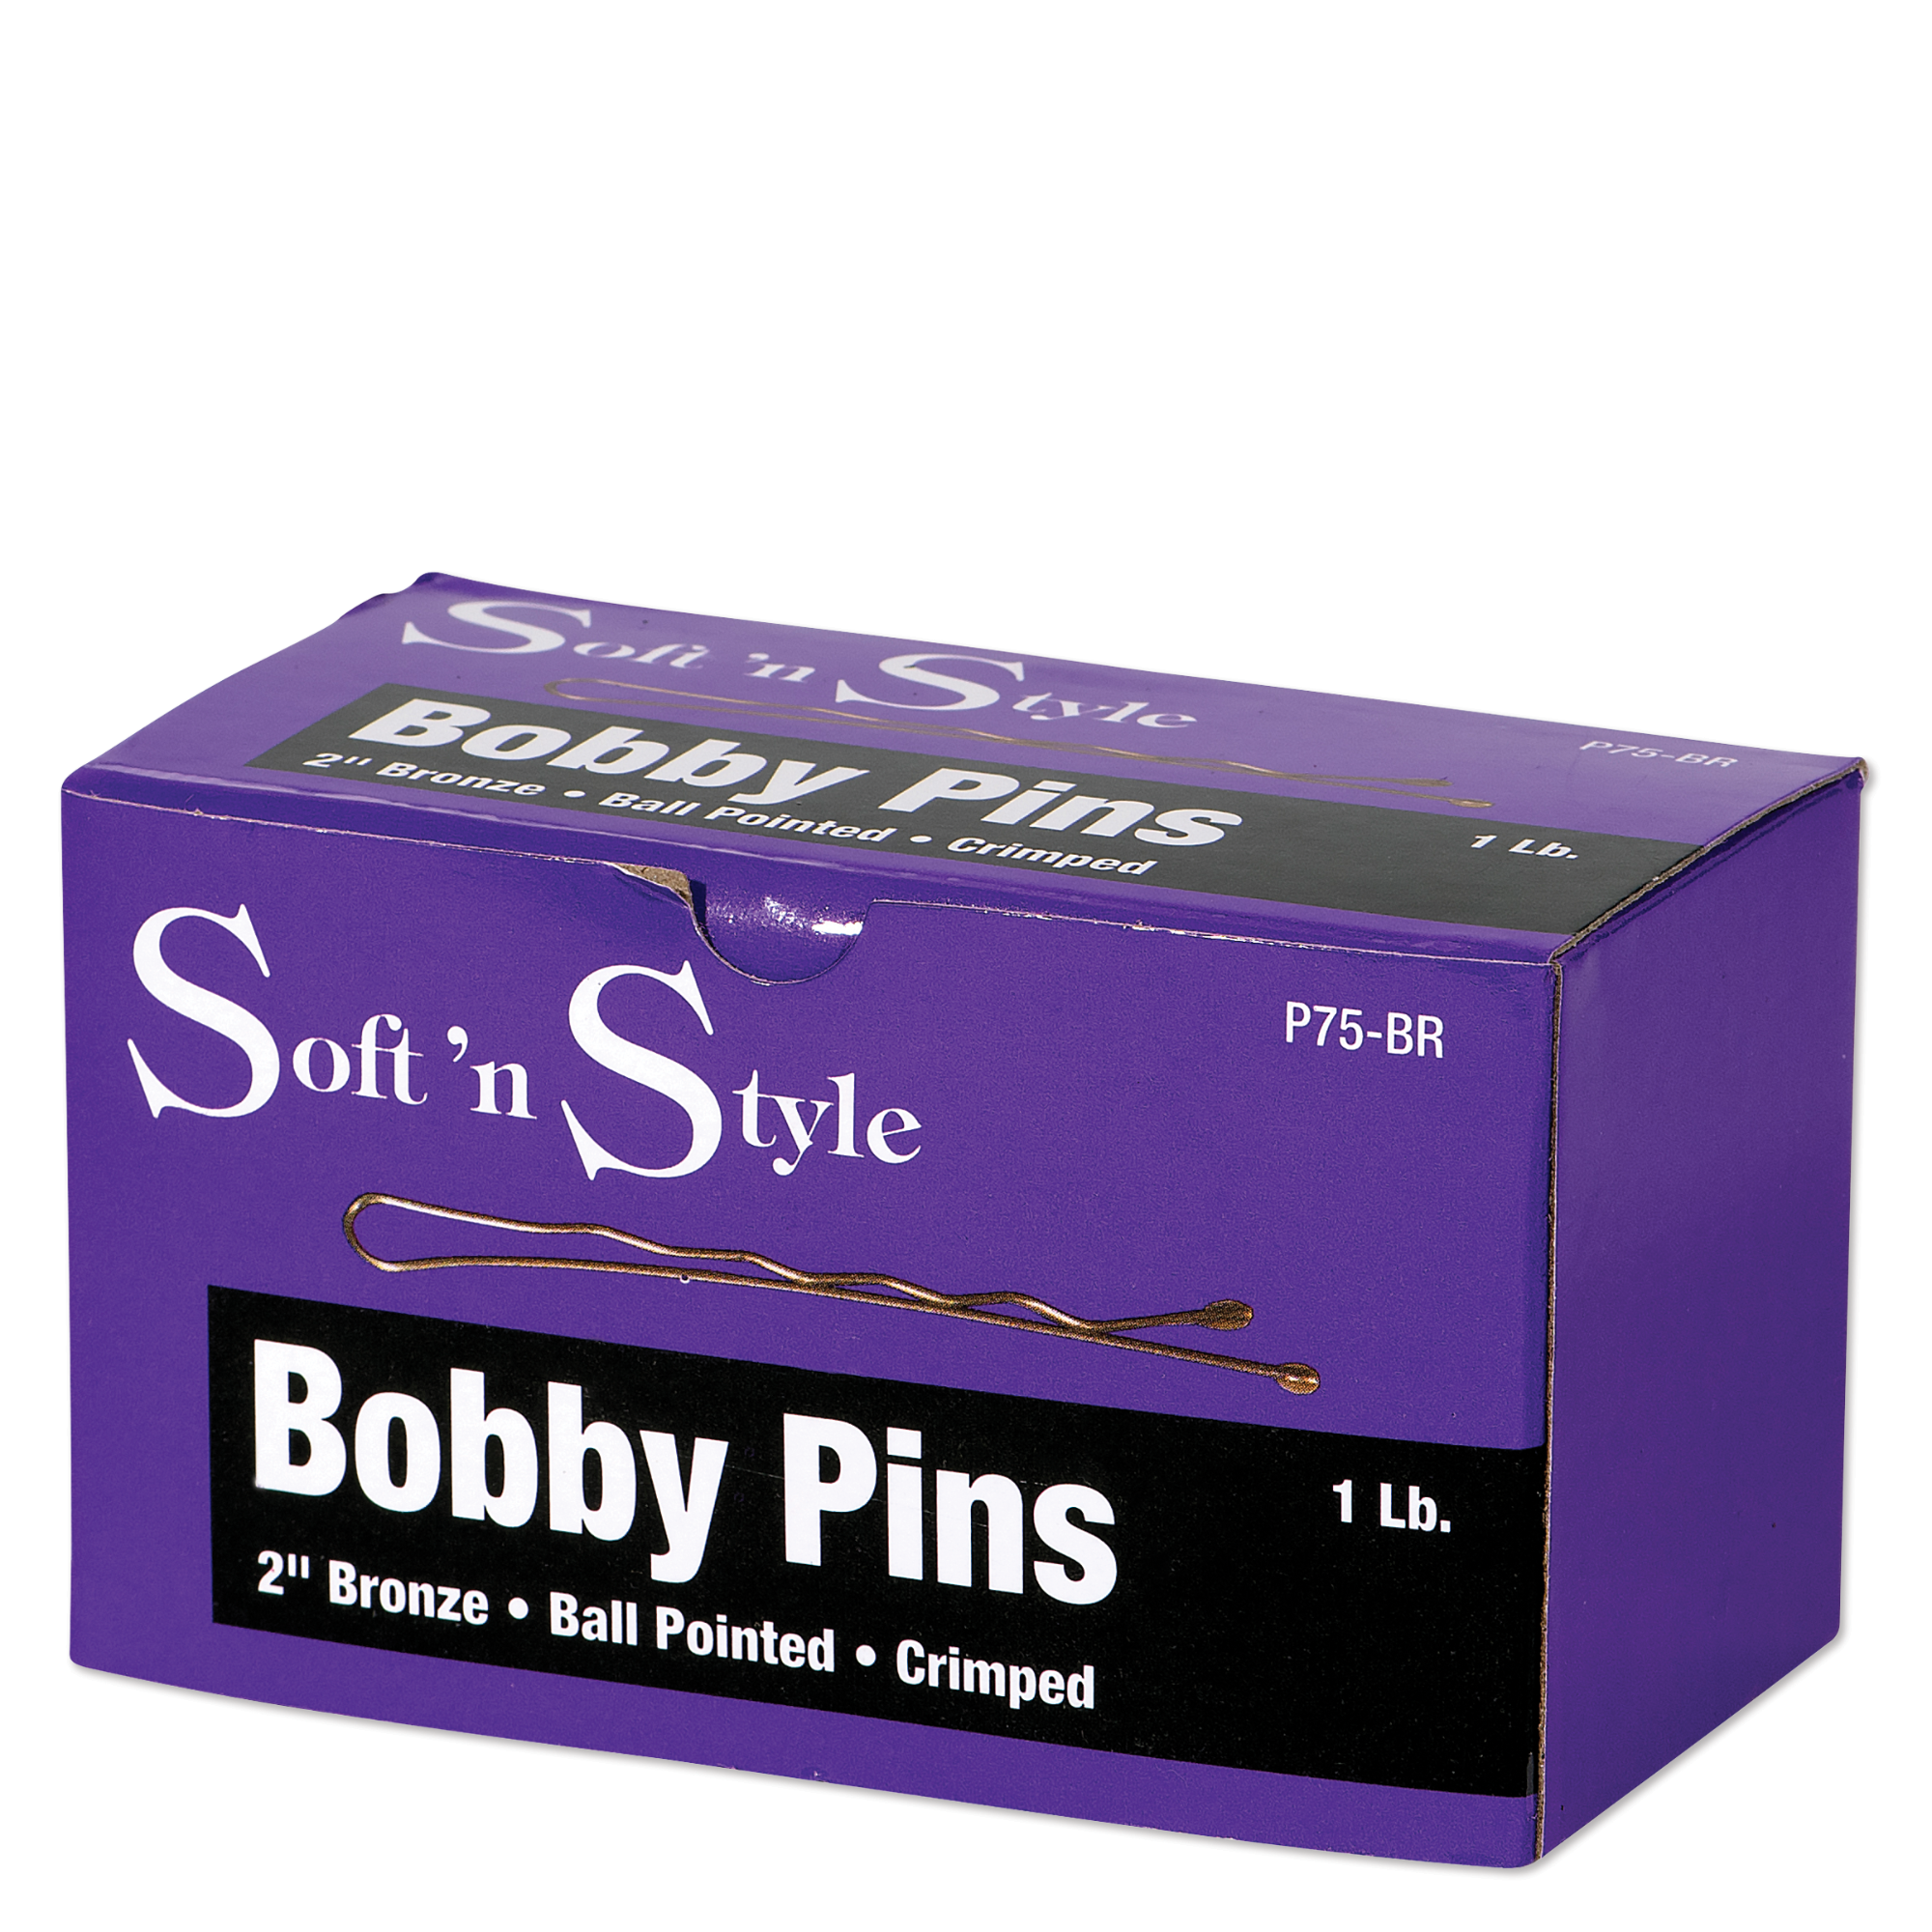 Bobby Pins, Bronze, 1 lb. box - 2"